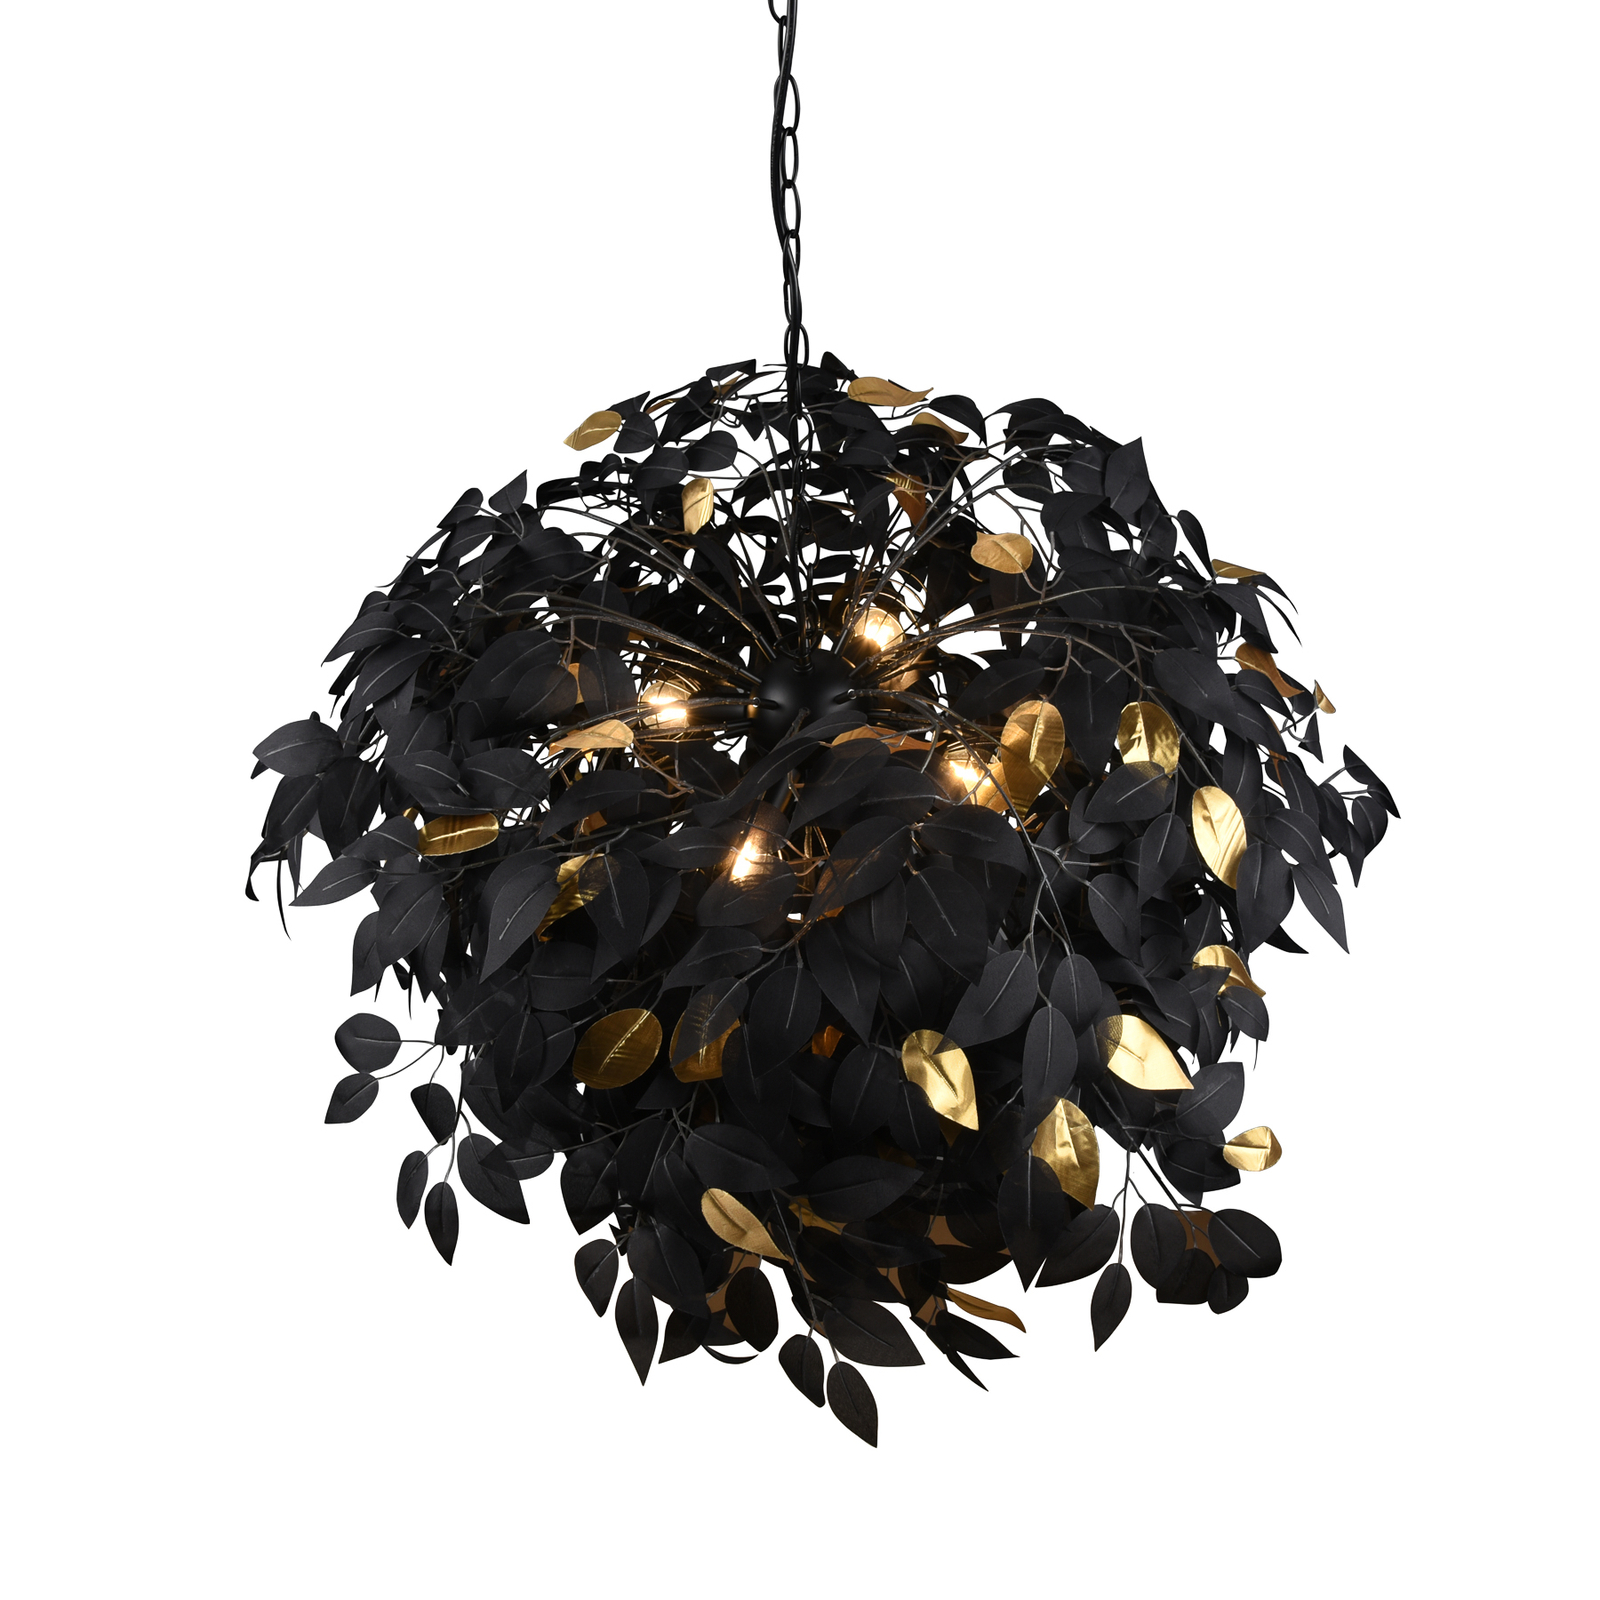 Leavy hanging light, black/gold, Ø 70 cm, plastic